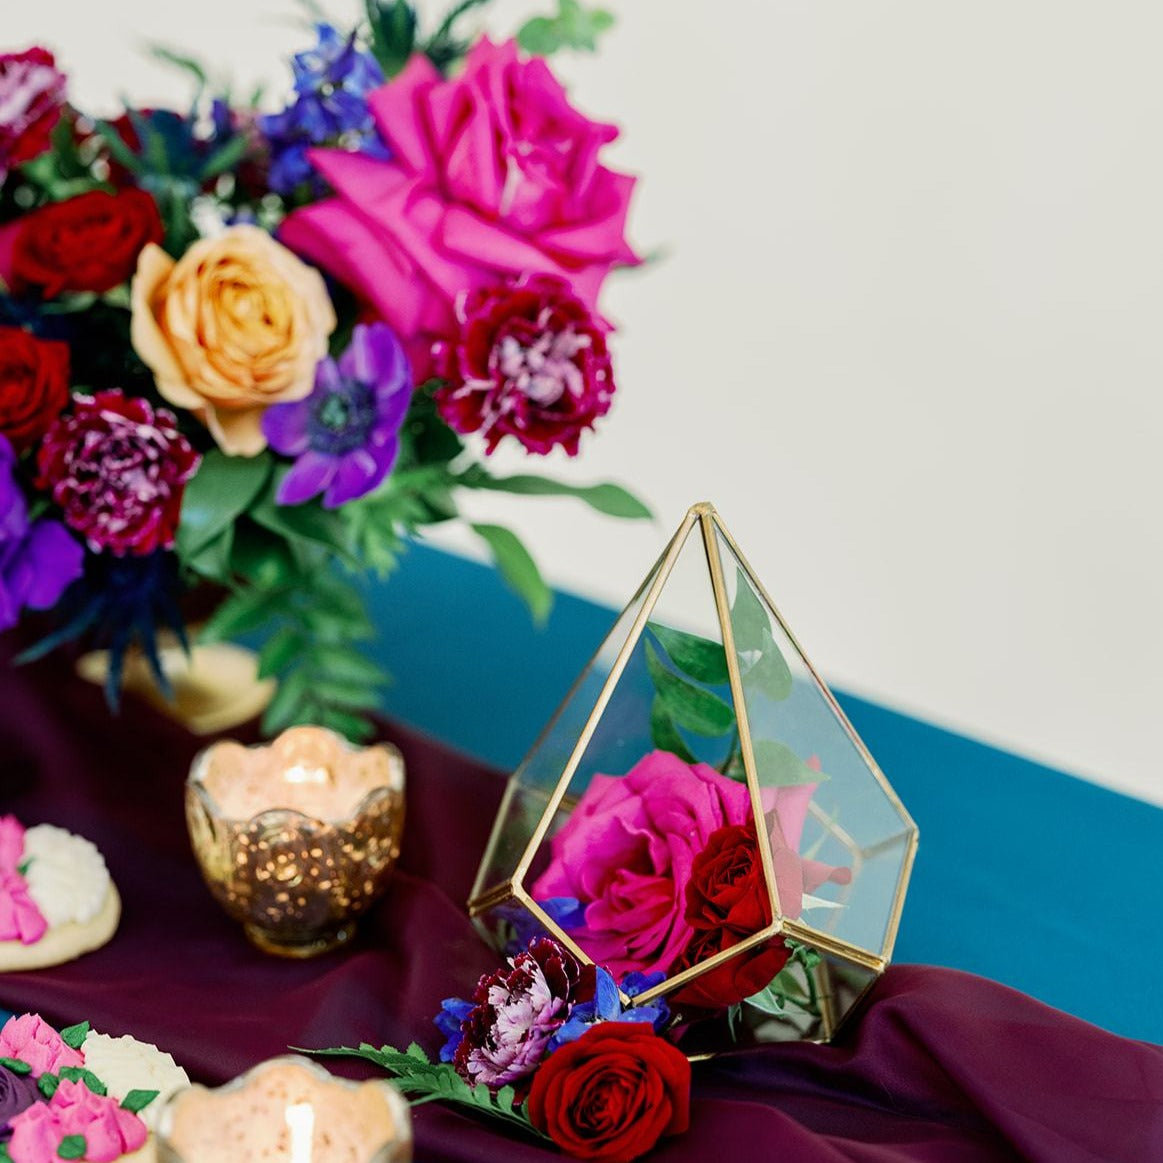 Jewel Tone Centerpiece for DIY Wedding Flowers 